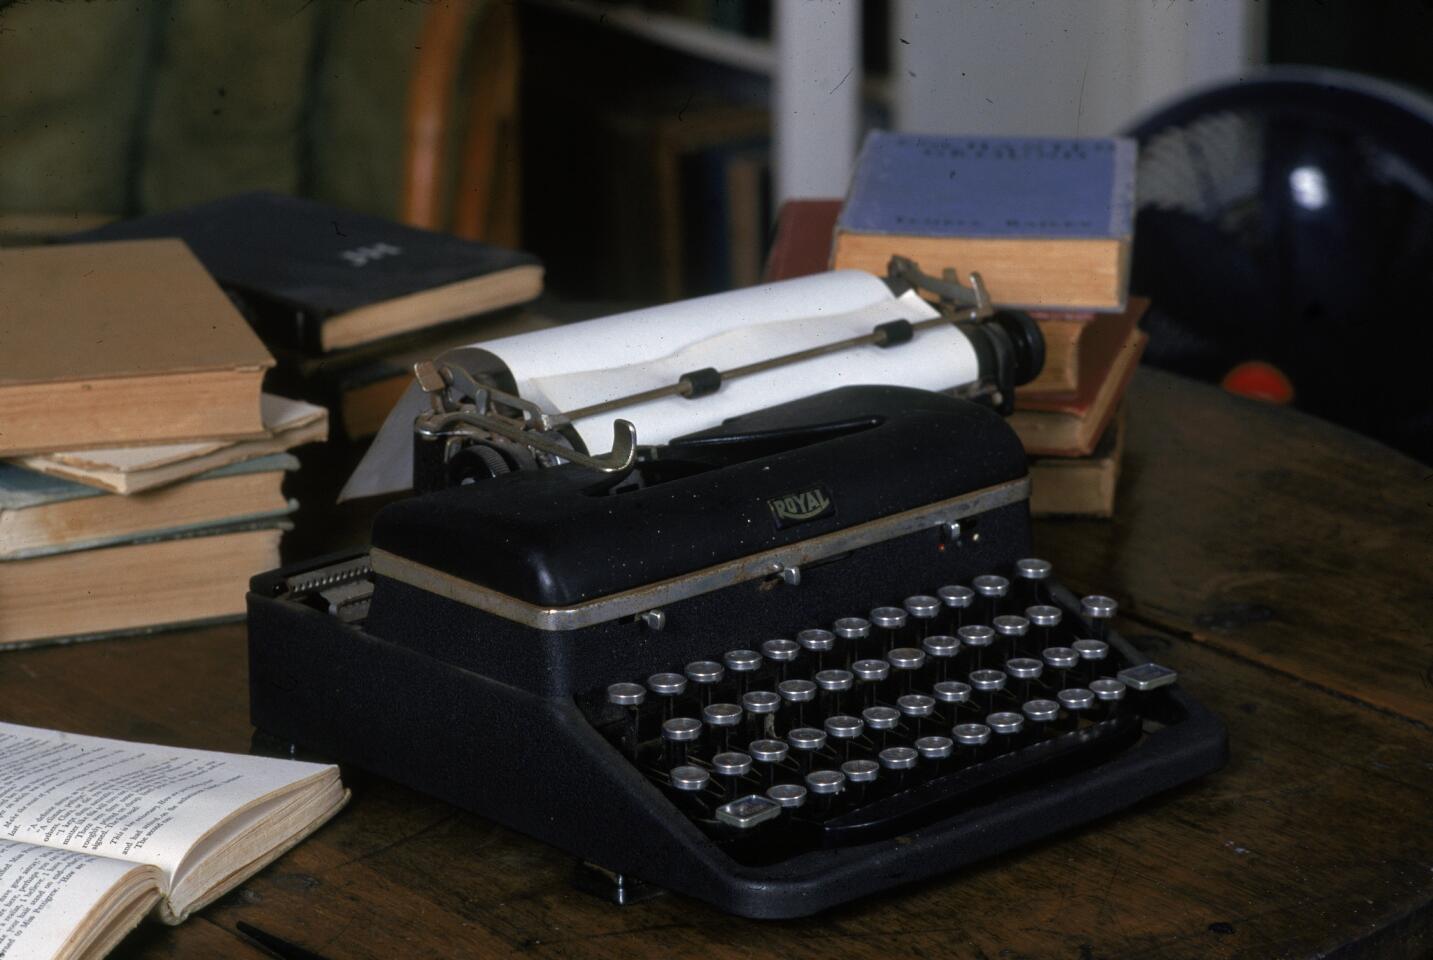 Ernest Hemingway's typewriter